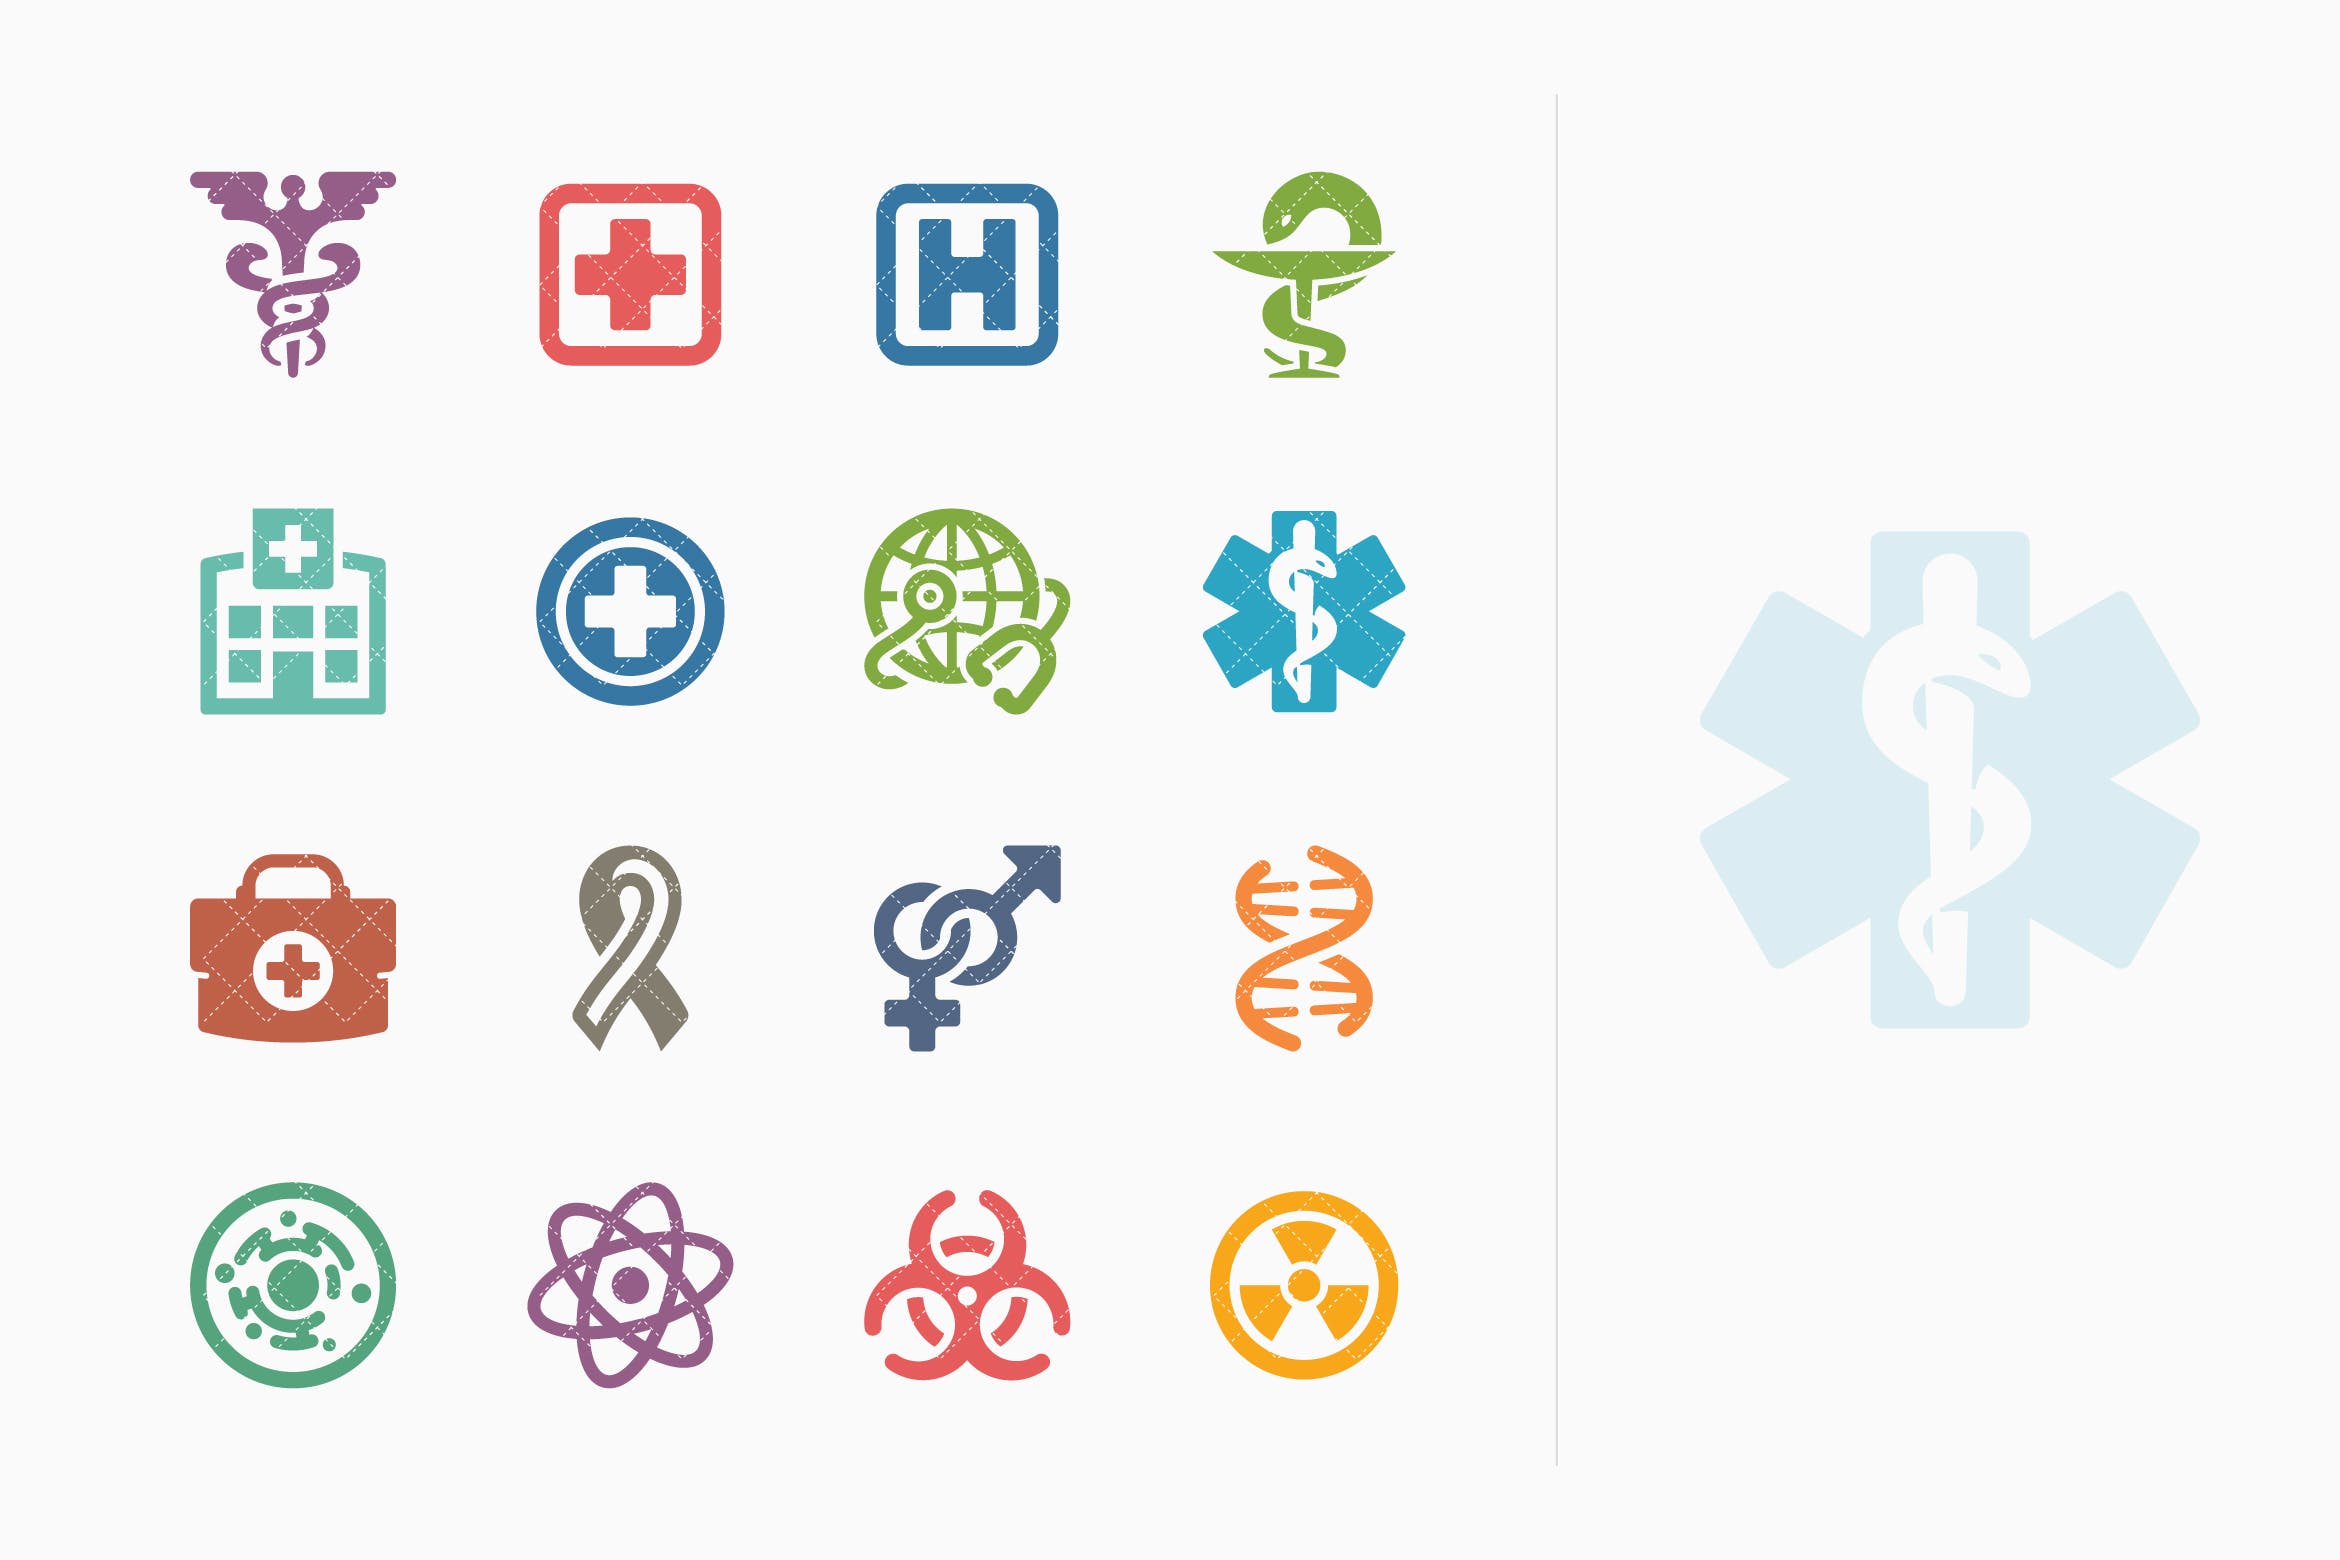 Colored系列-医疗保健主题矢量素材库精选图标集v1 Medical & Health Care Icons Set 1 – Colored Series插图